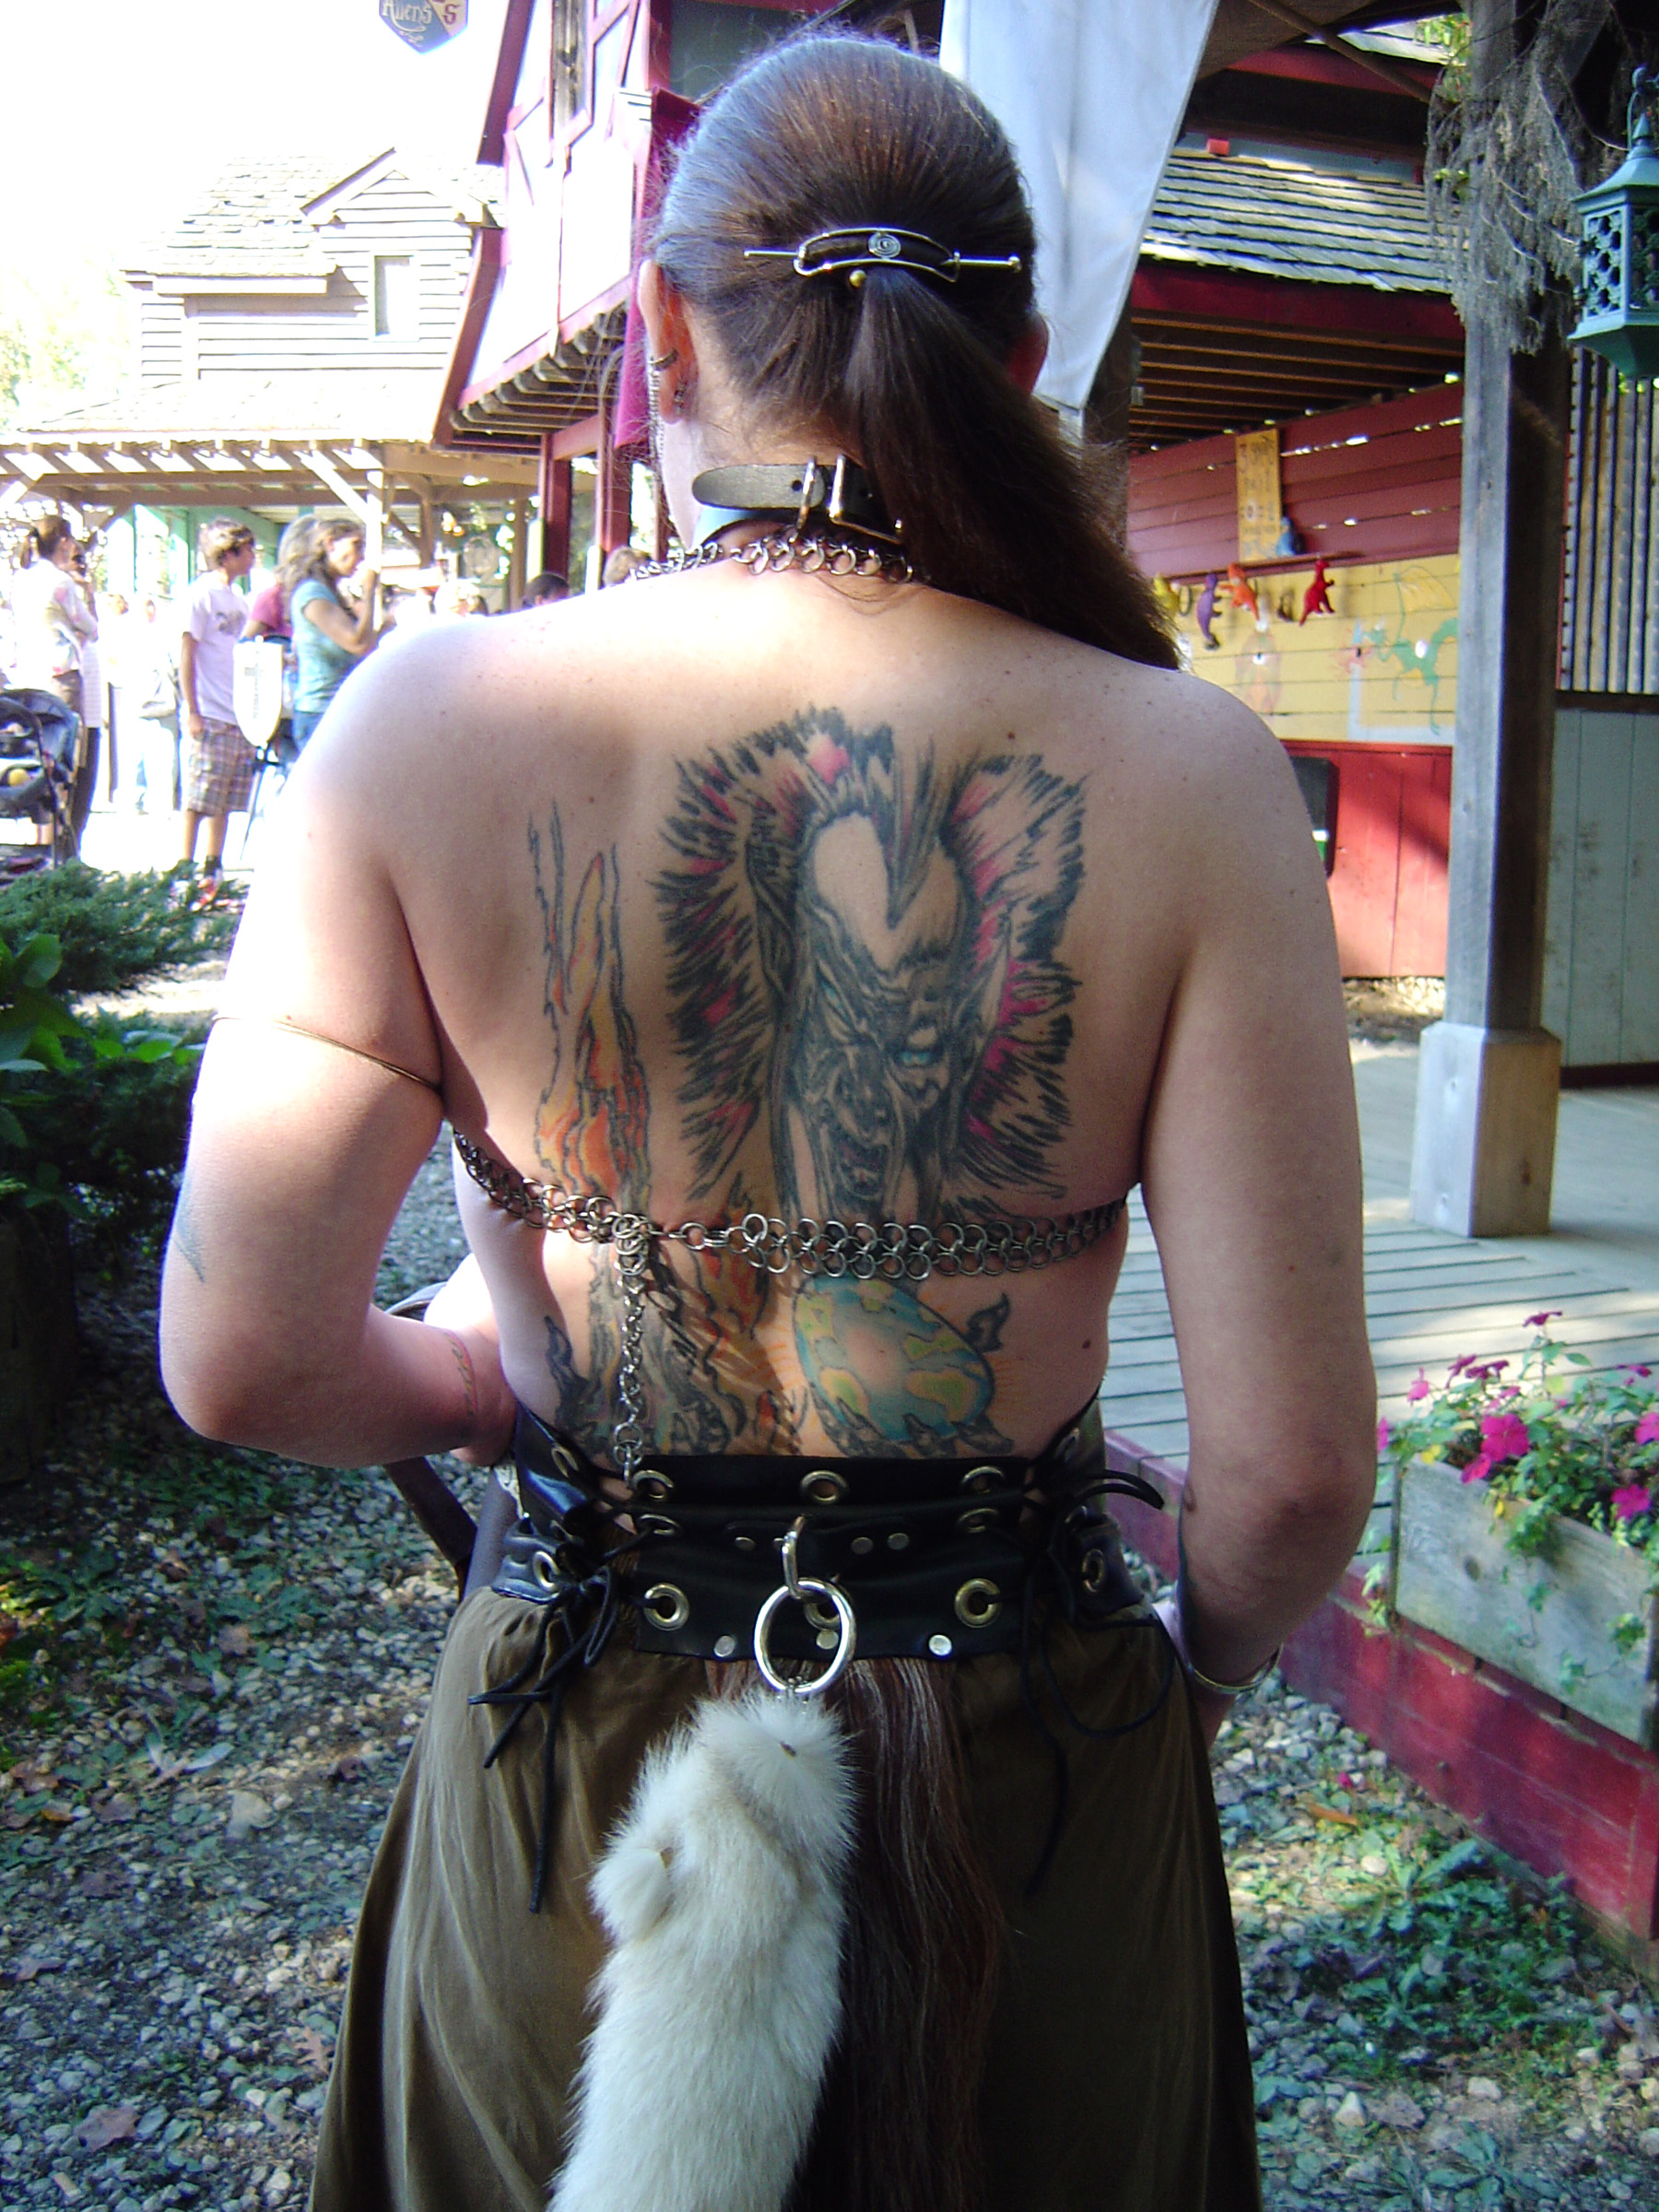 Geometric Spiritual Tatoo on Back | Best Tattoo Ideas Gallery